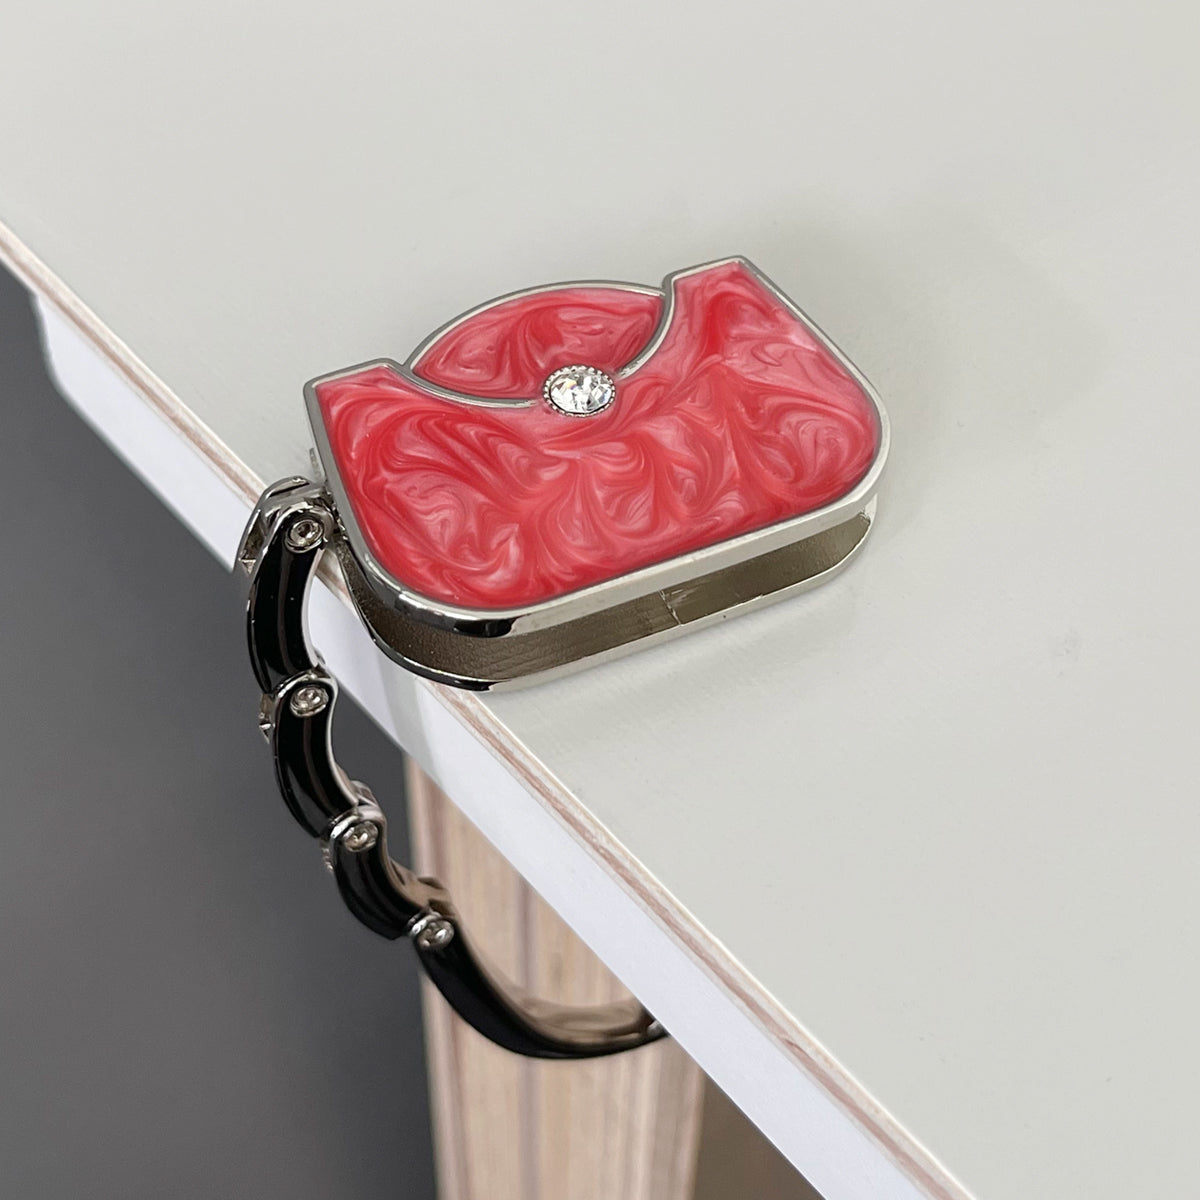 Wrapables Stylish Purse Hook Hanger, Foldable Handbag Table Hanger Rose Baguette